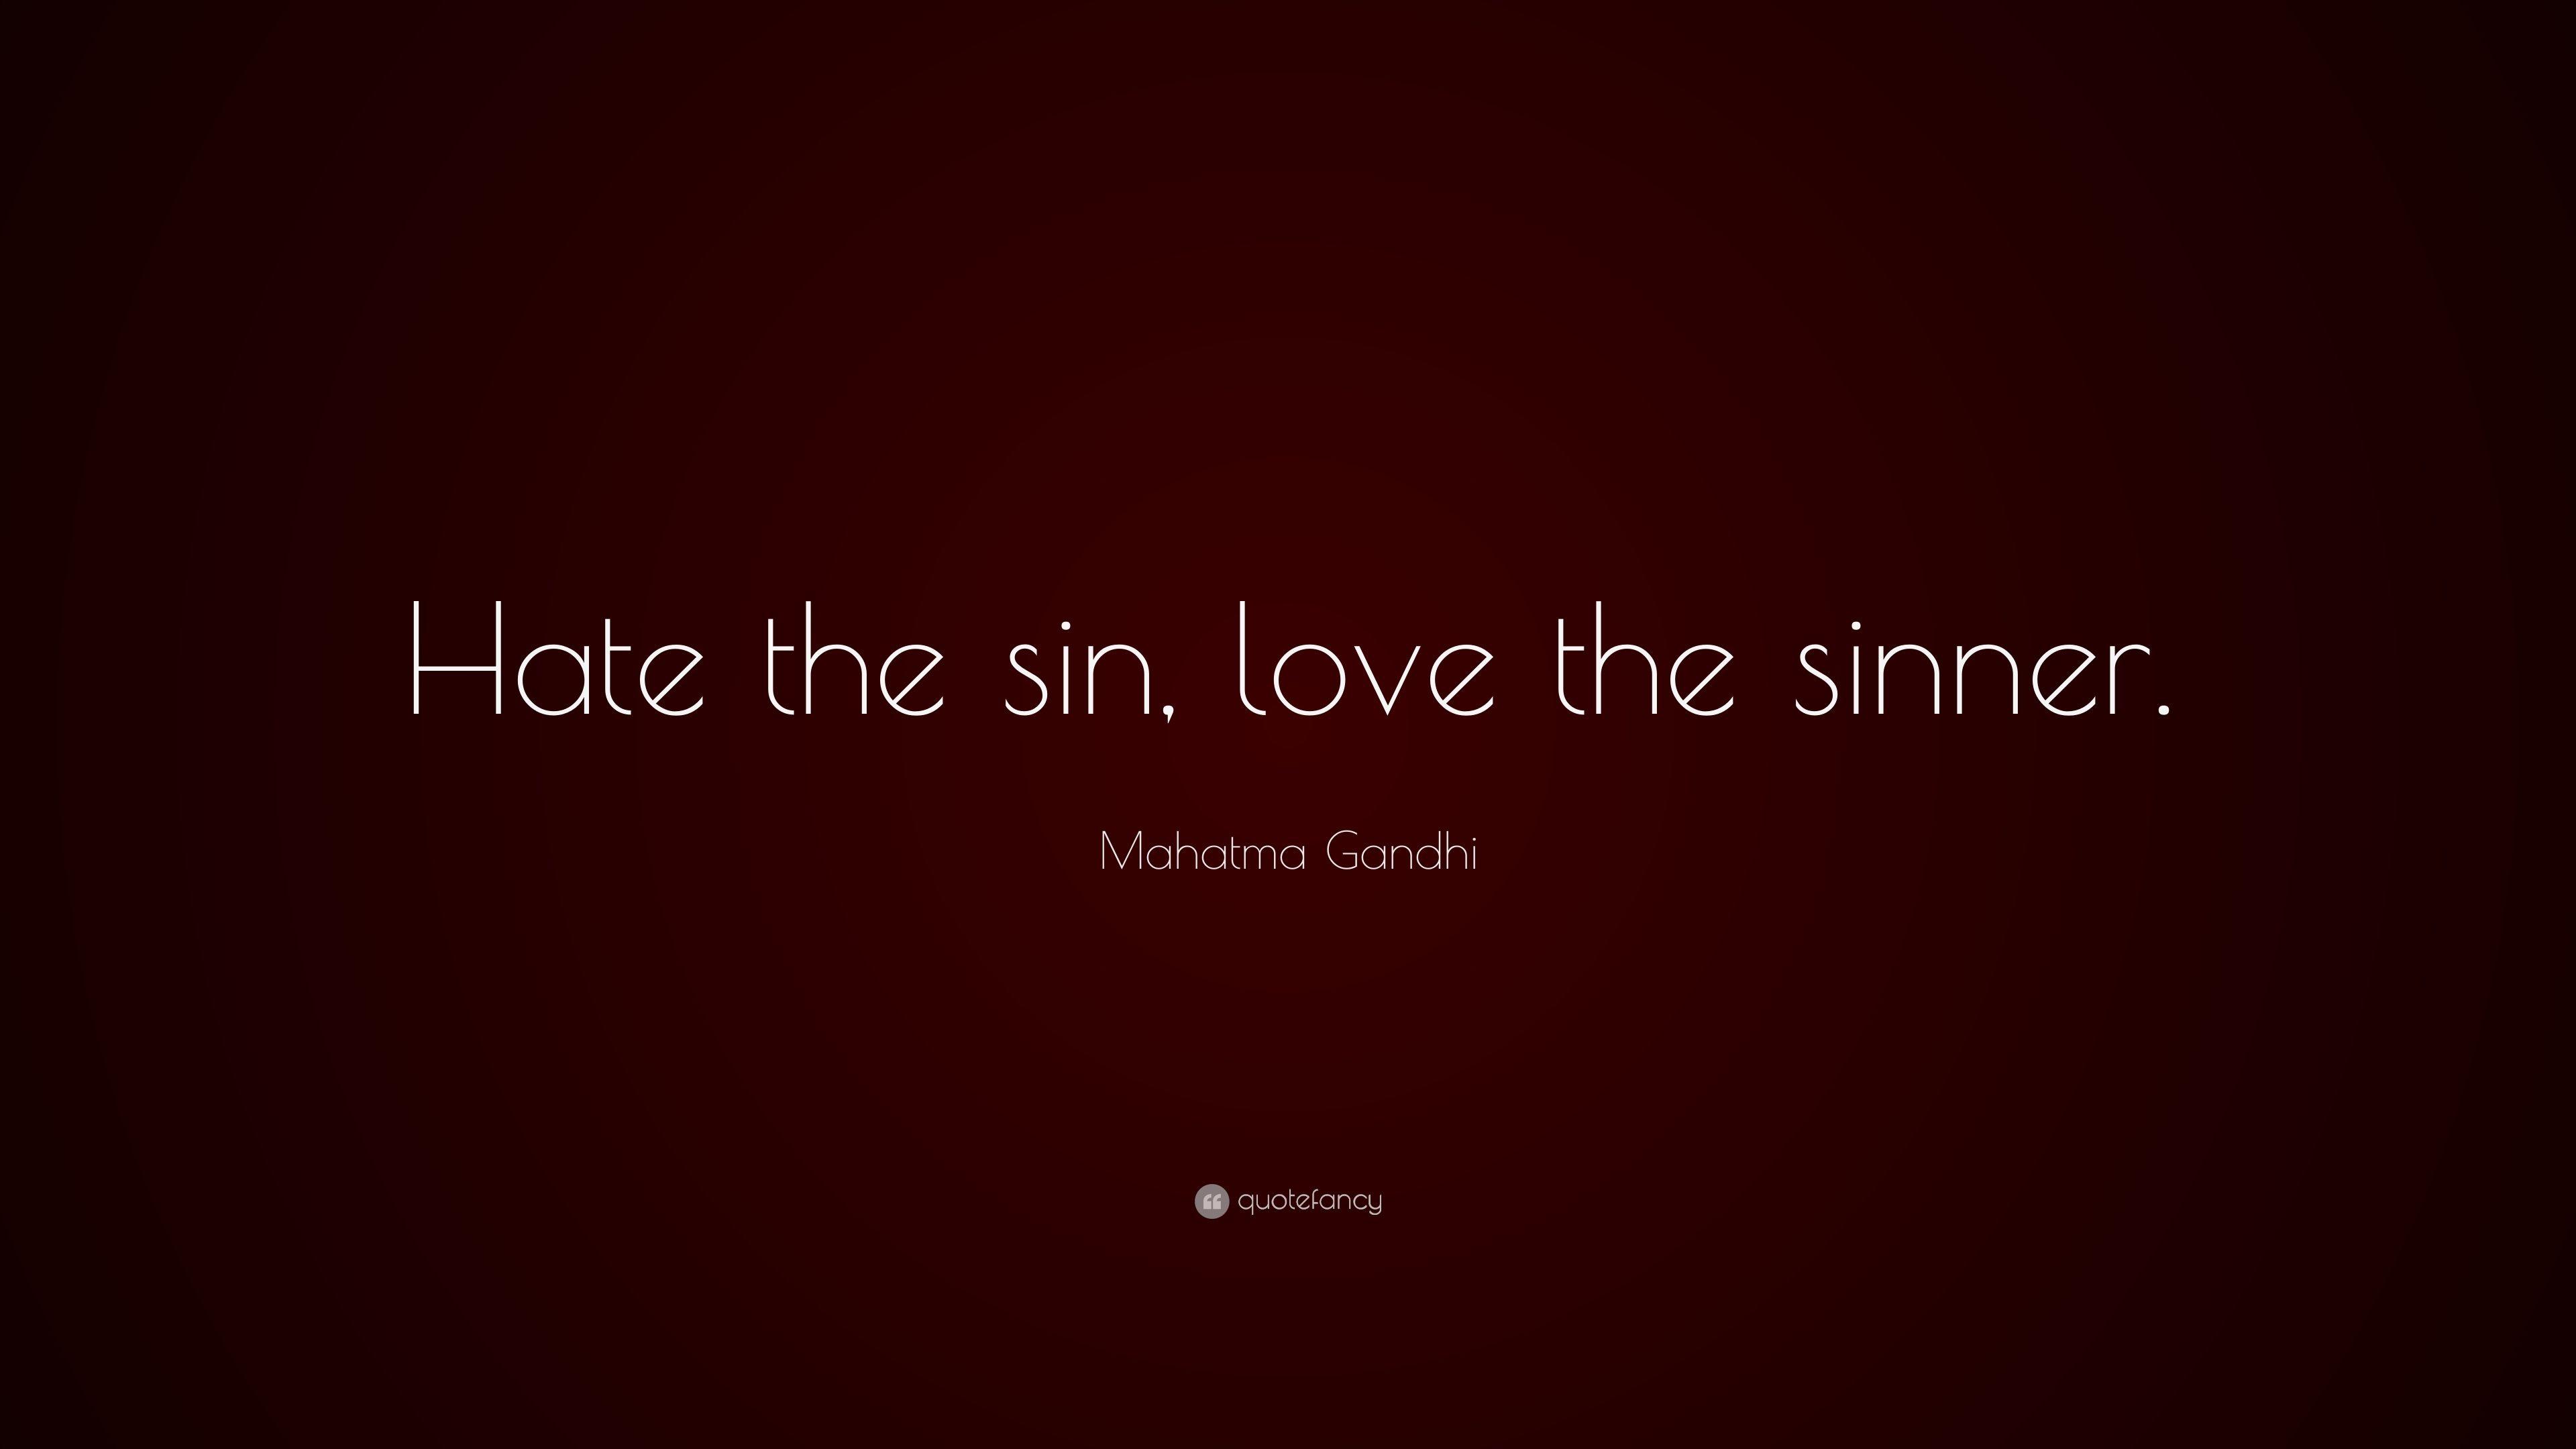 Mahatma Gandhi Quote: “Hate the sin, love the sinner.” 16